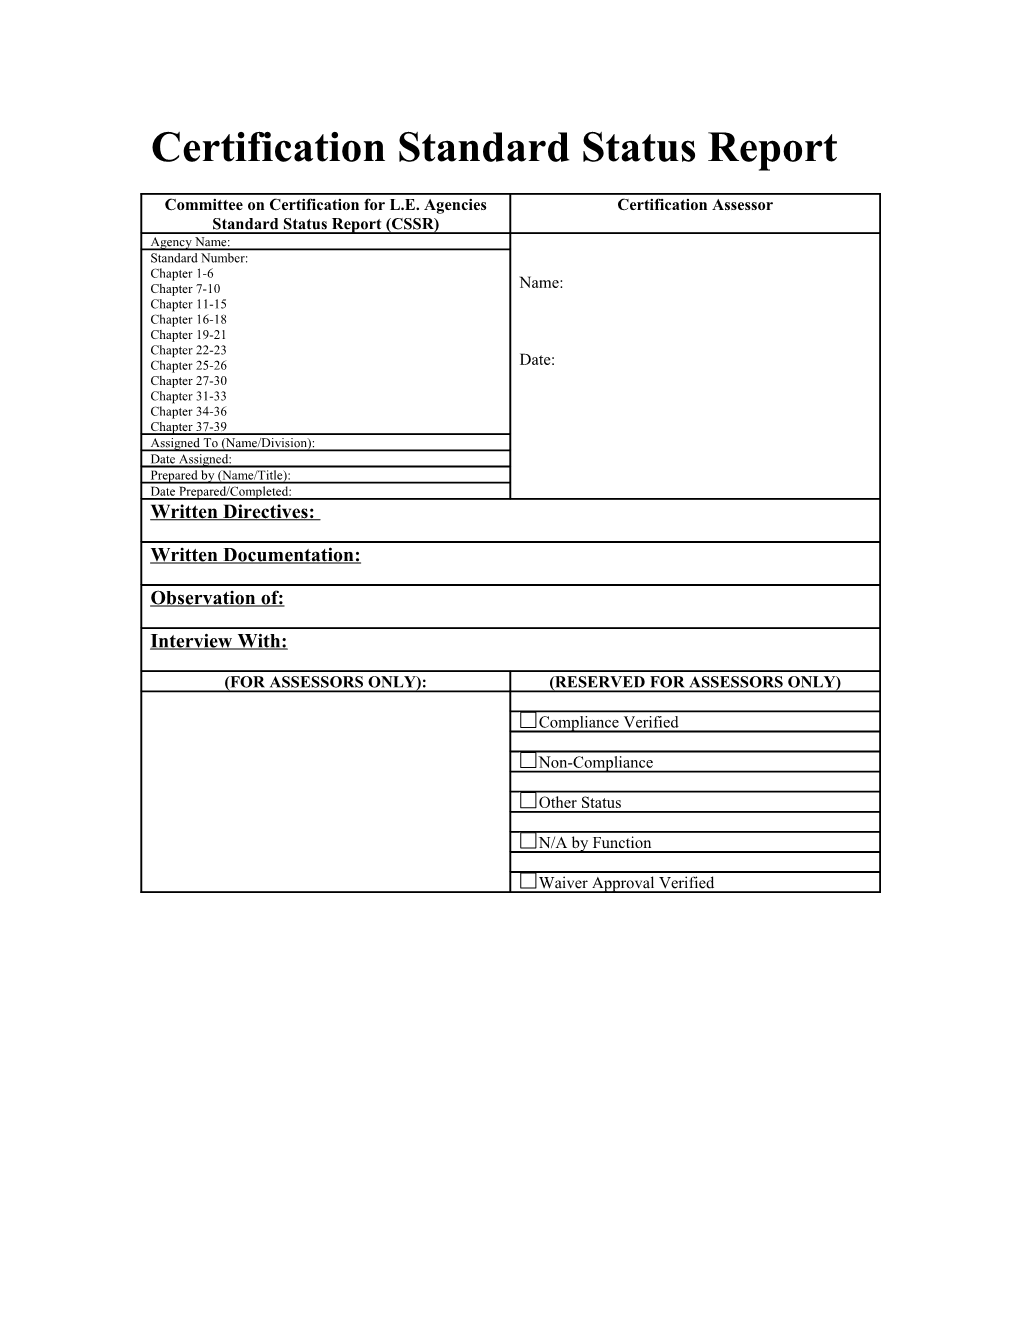 Certification Standard Status Report